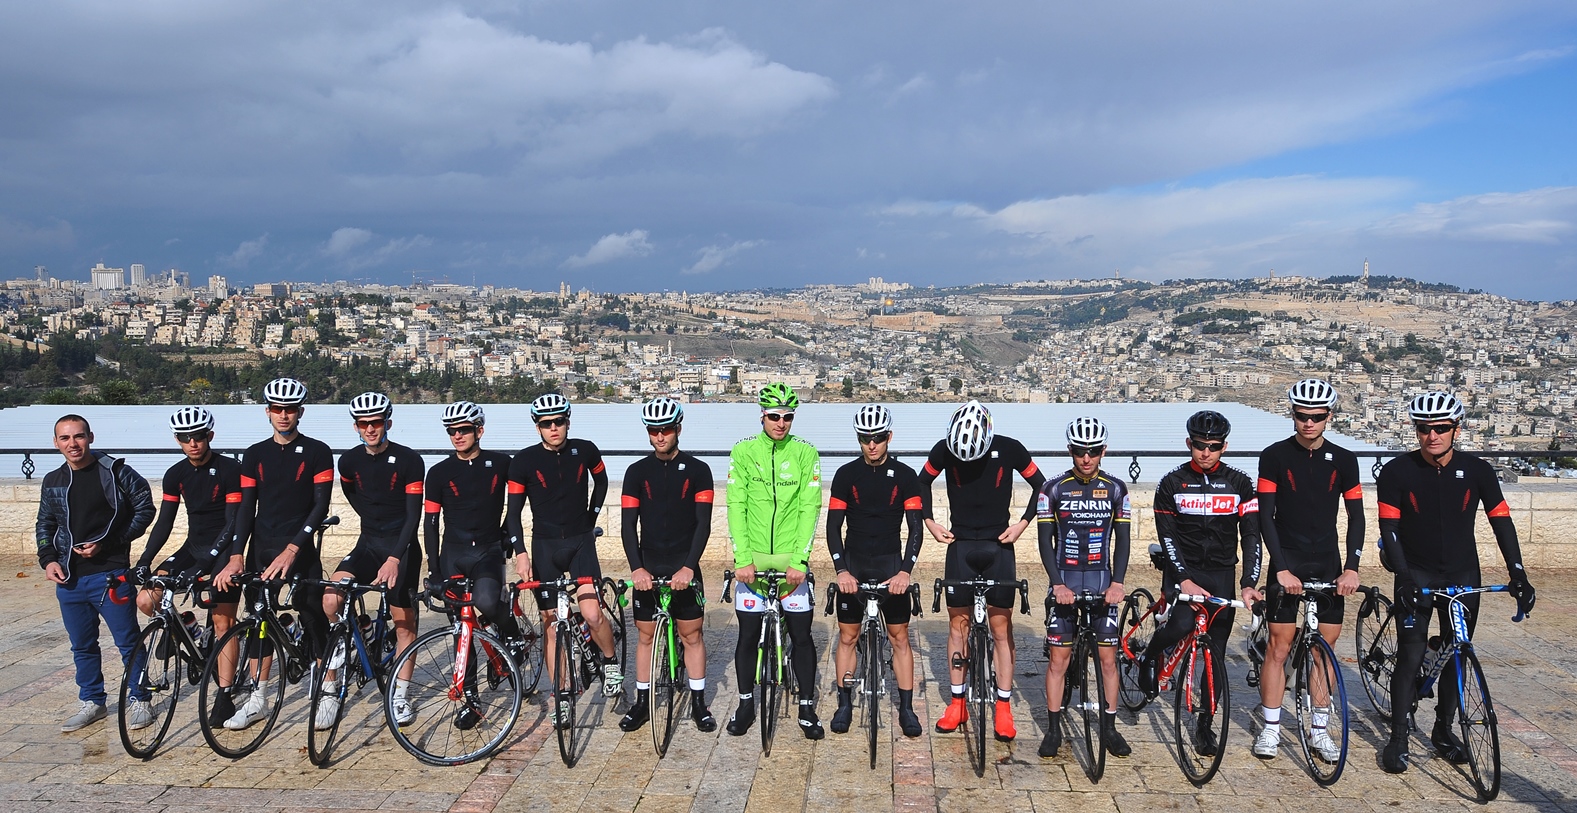 Team Cycling Academy at the promenade overlooking Jerusalem. Photo: Tim de Waele/TDWSport.com